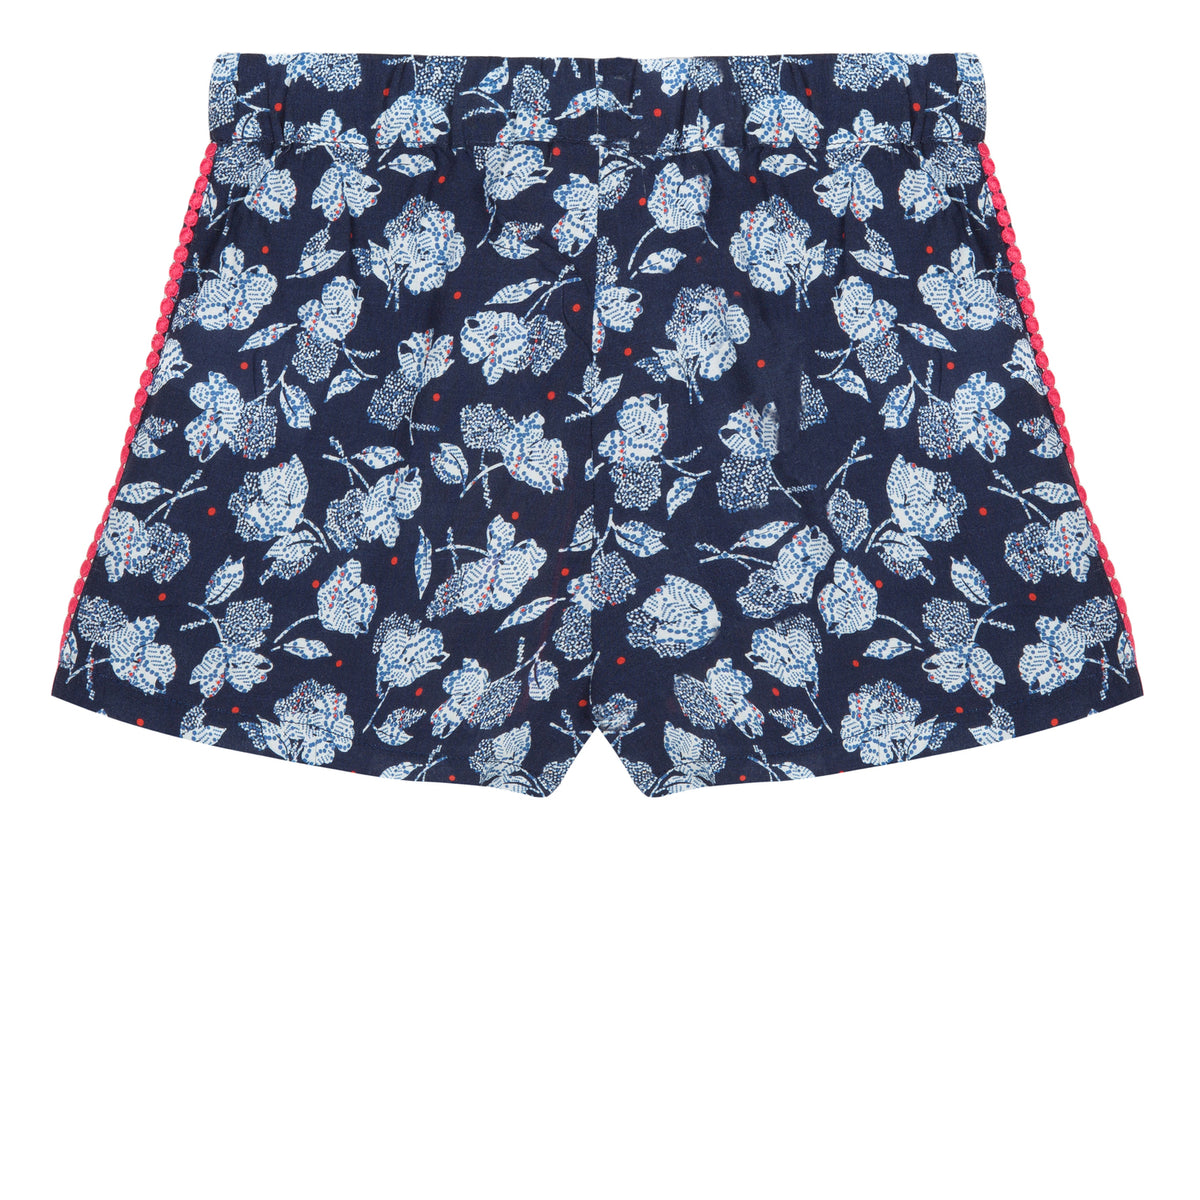 Girls Blue Print Shorts with Tassels